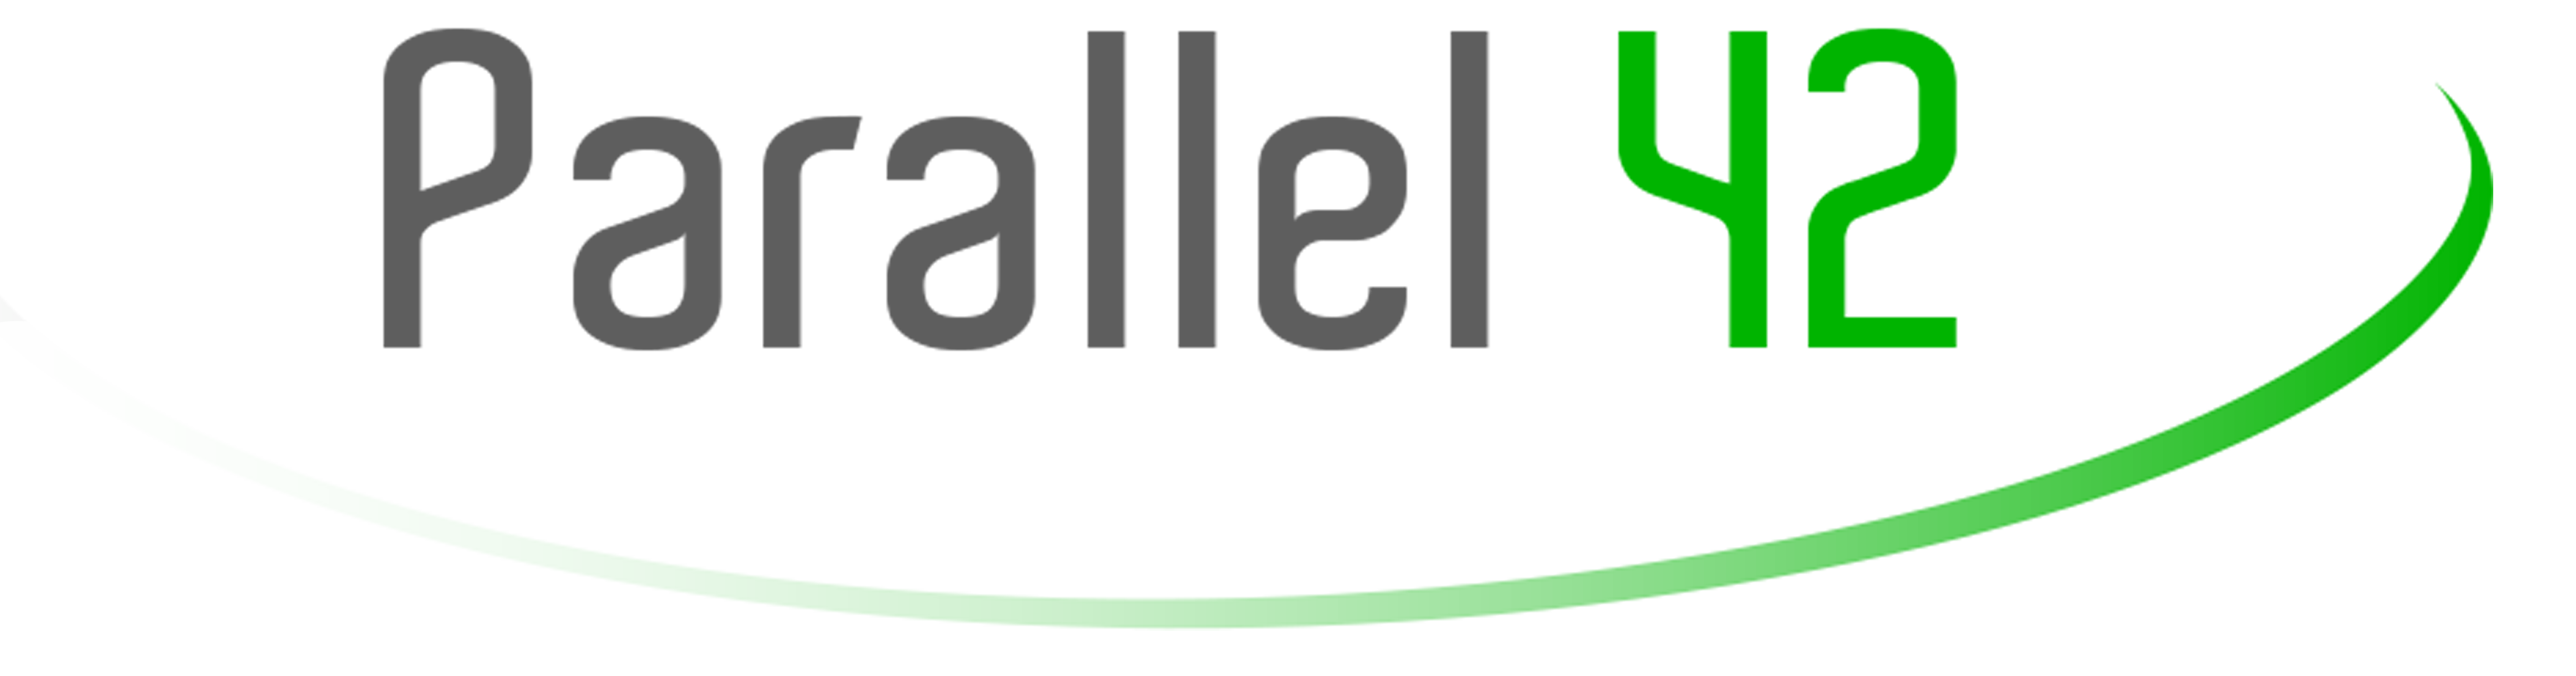 Parallel 42 logo